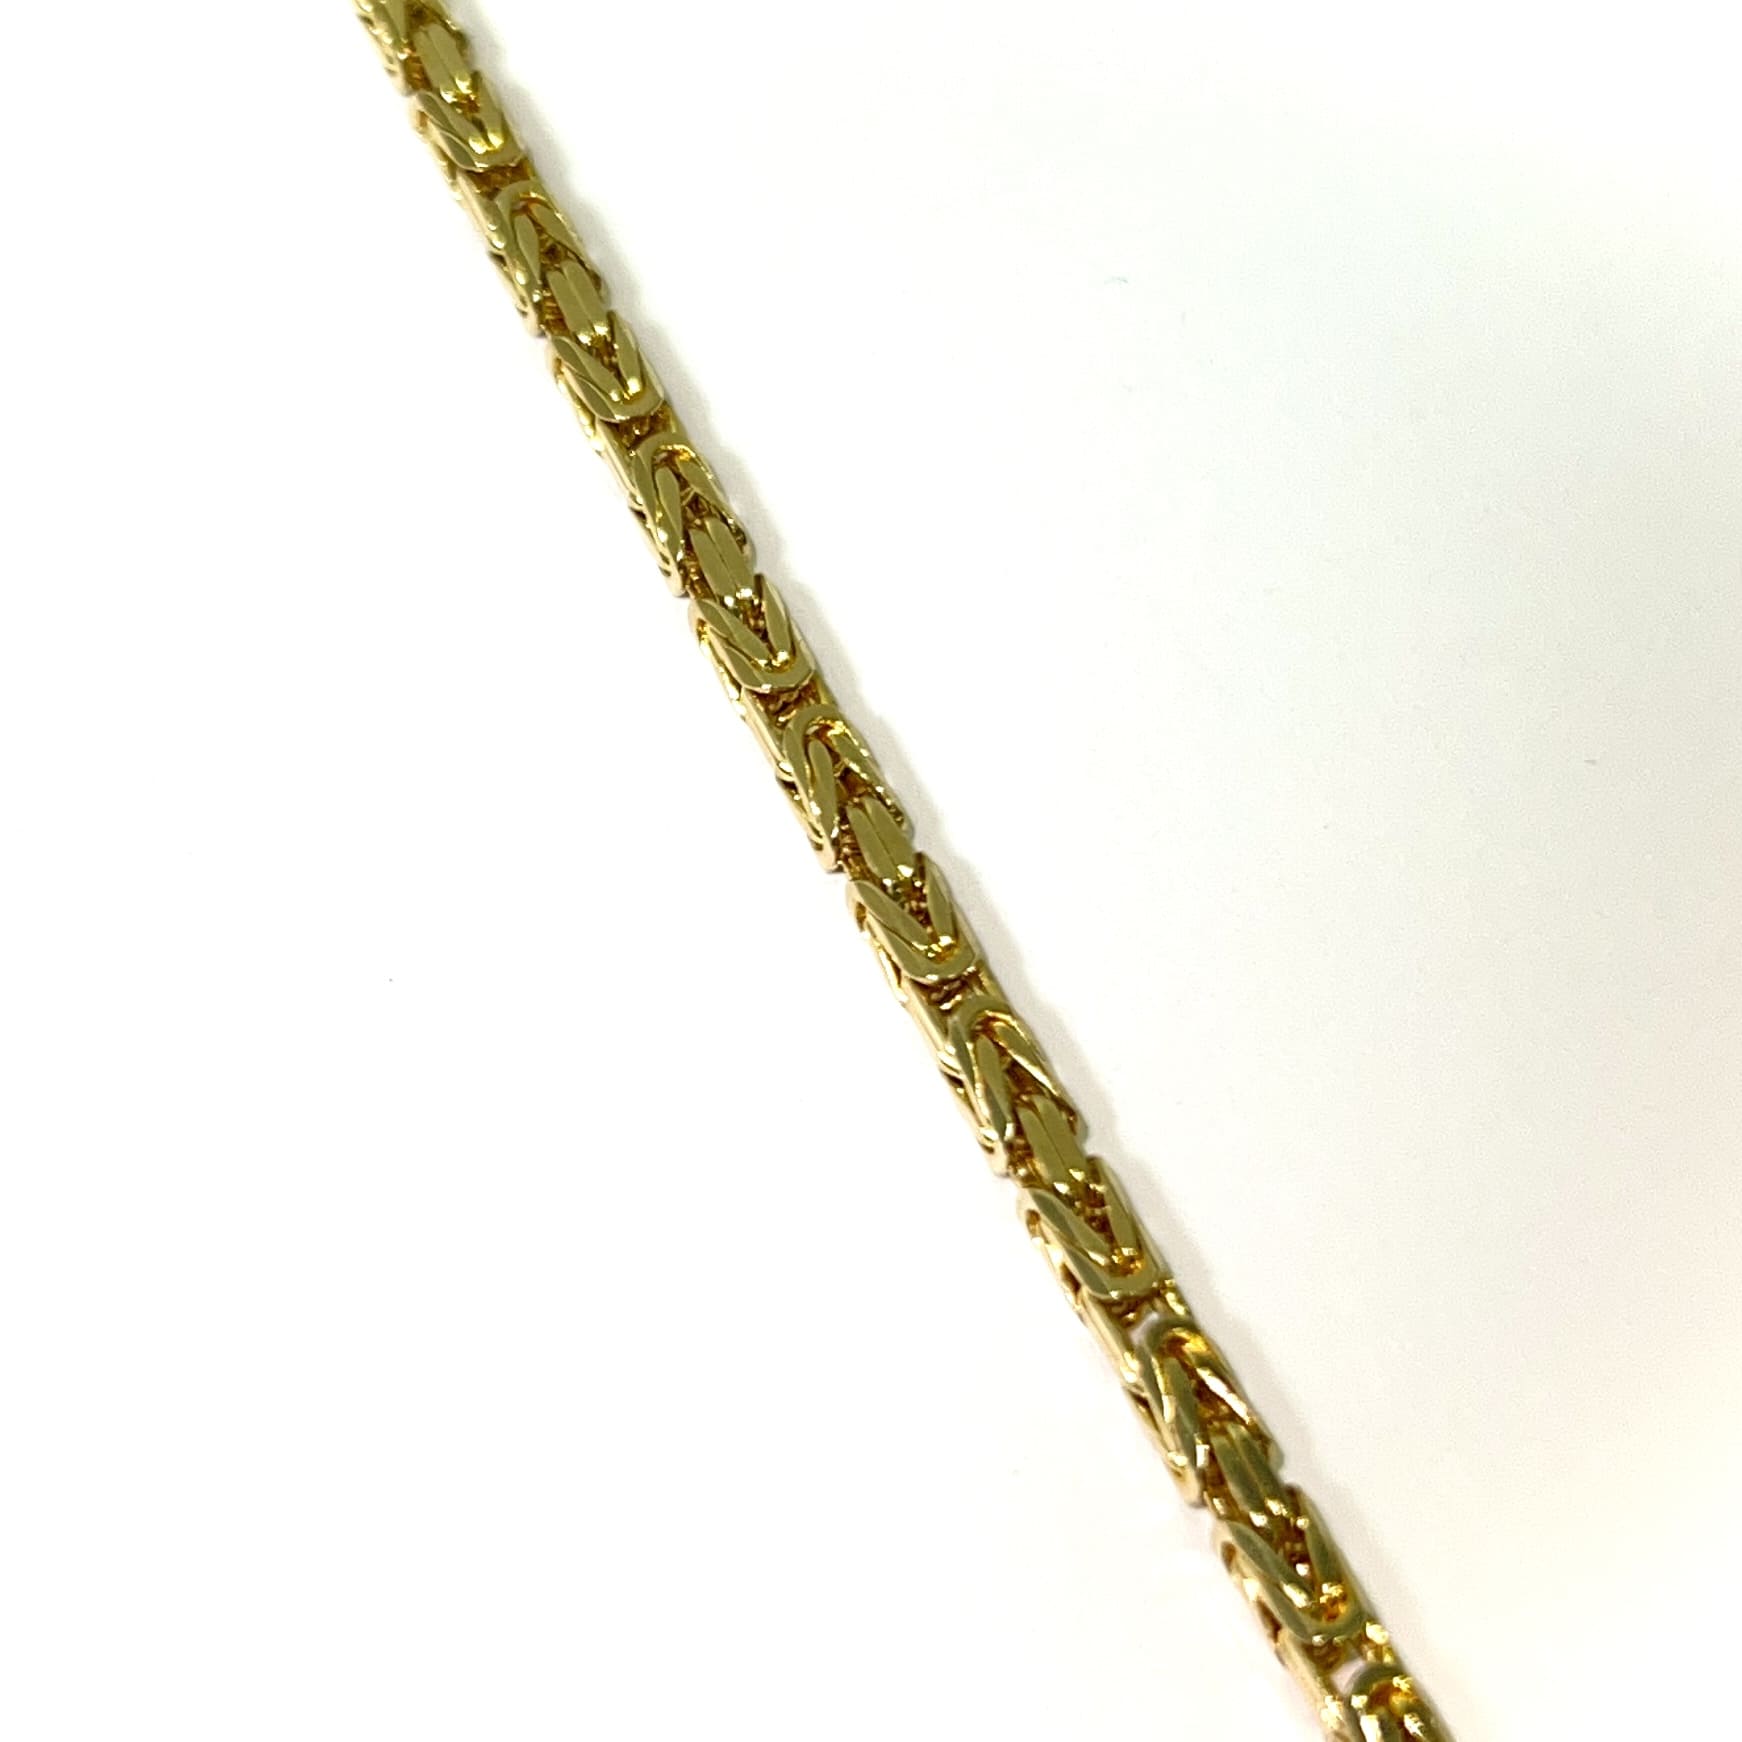 Kingschain Bracelet - 14 Carat Gold - 20cm / 3mm - 298